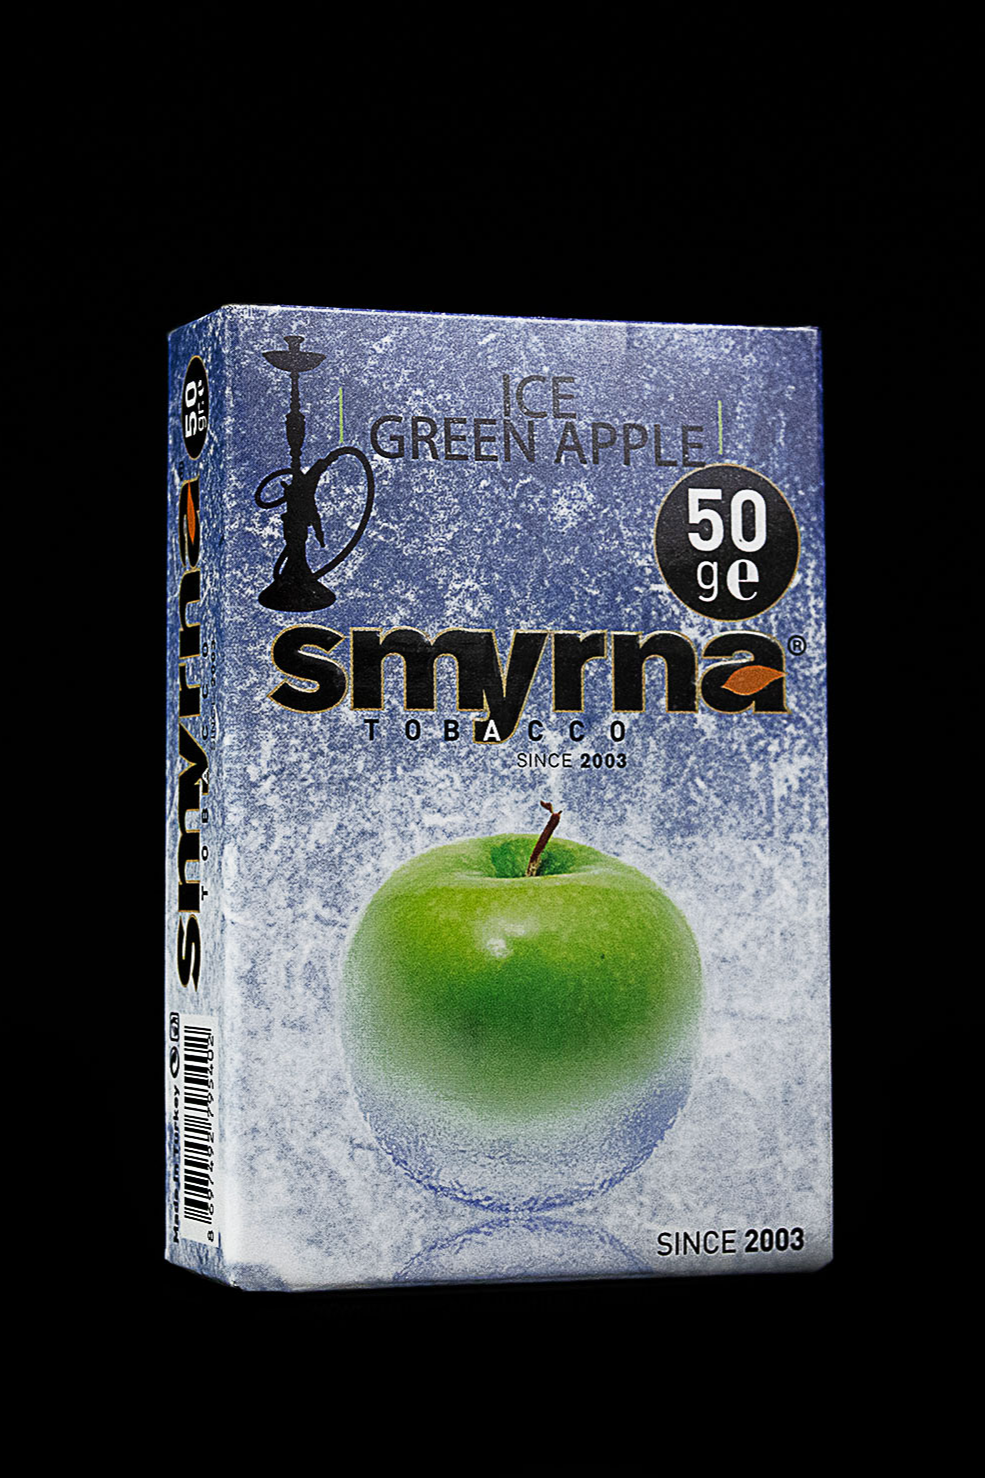 Smyrna ICE GREEN APPLE